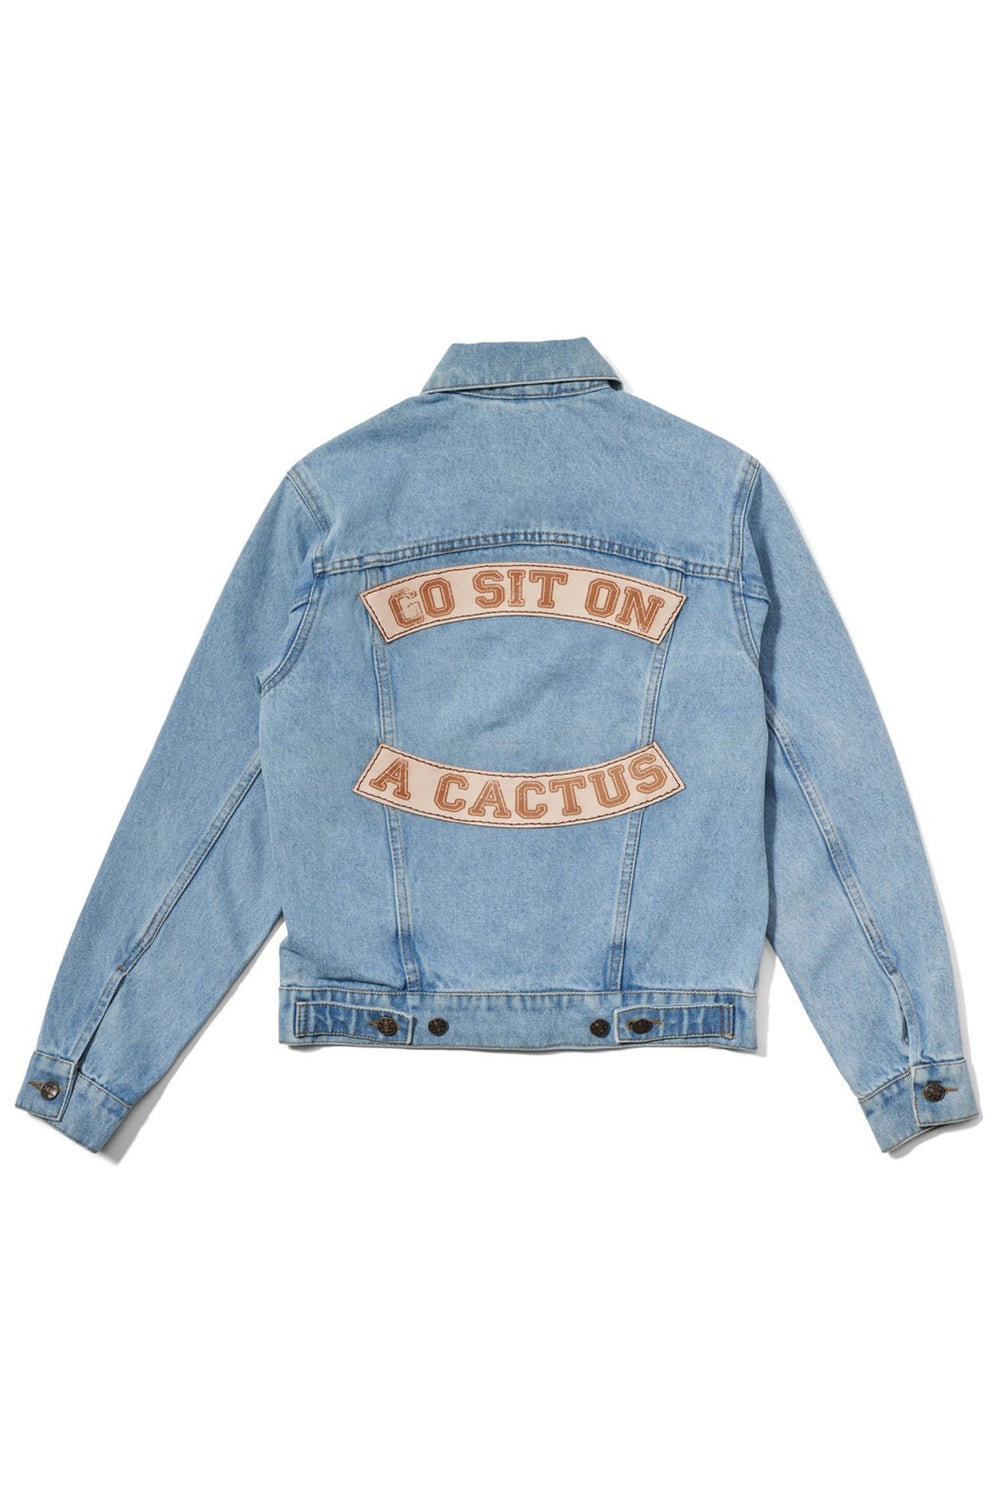 Go Sit On A Cactus Jacket